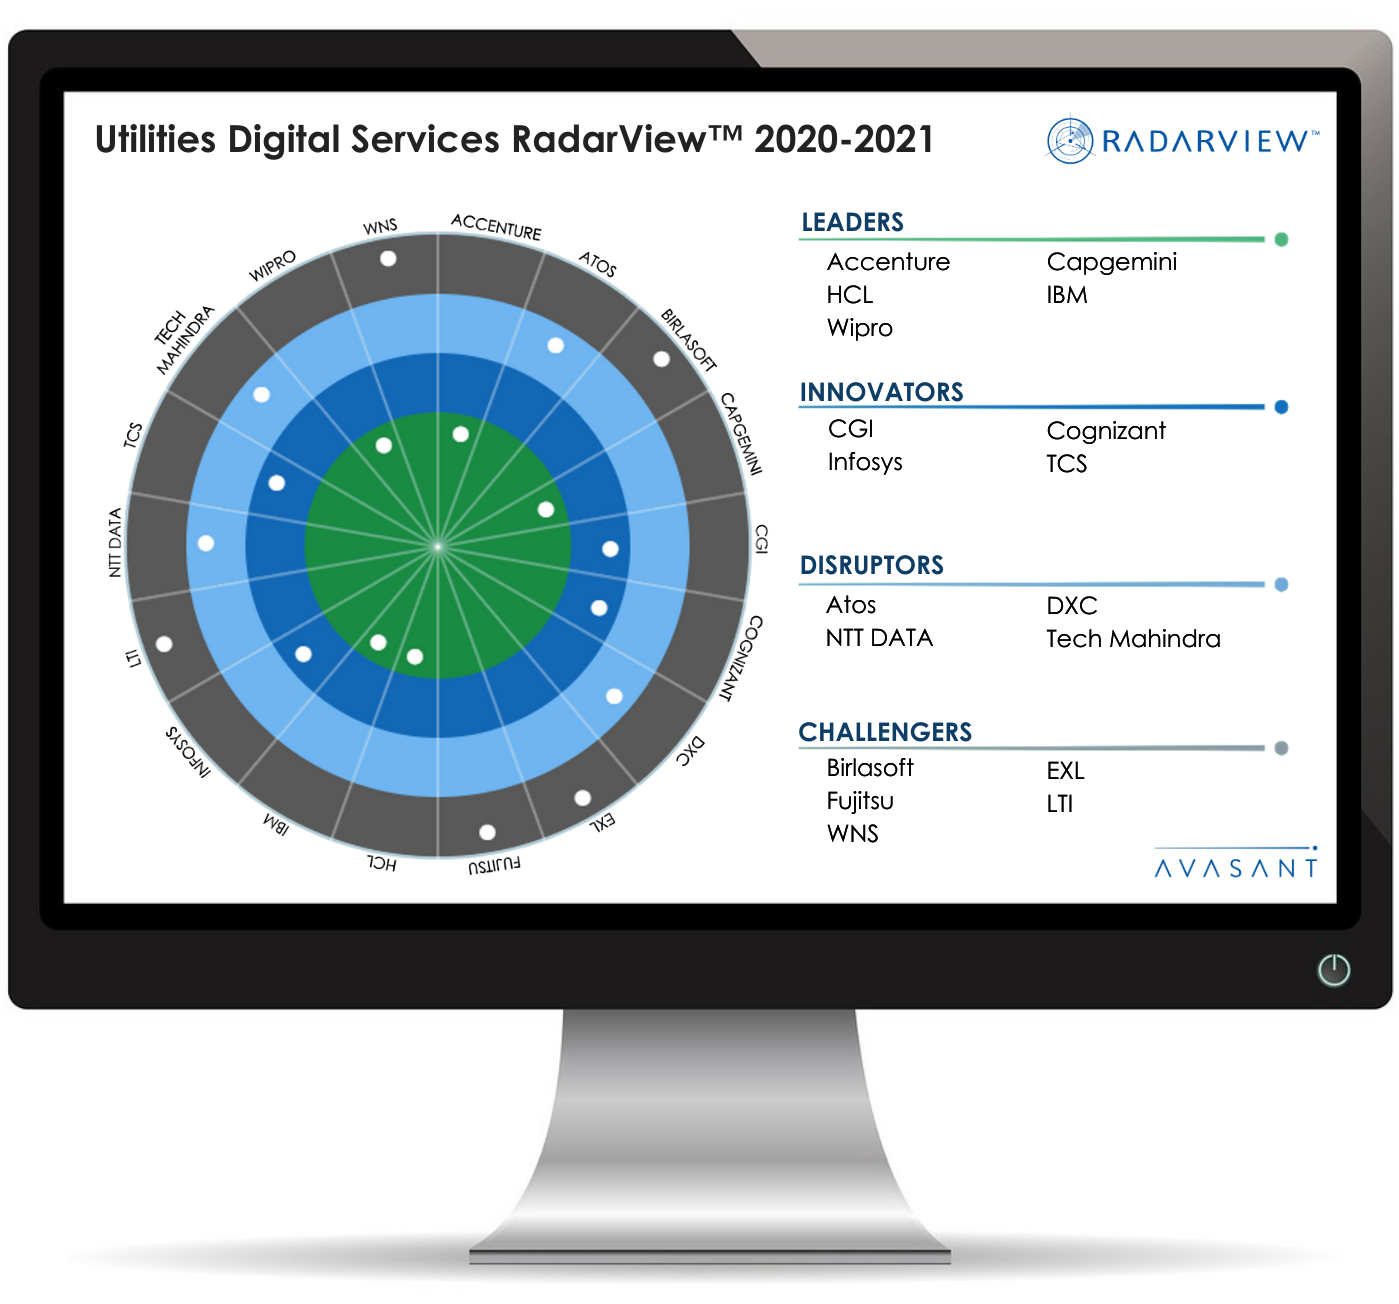 Utilities RV 1 - Utilities Digital Services RadarView™ 2020-2021 - WNS